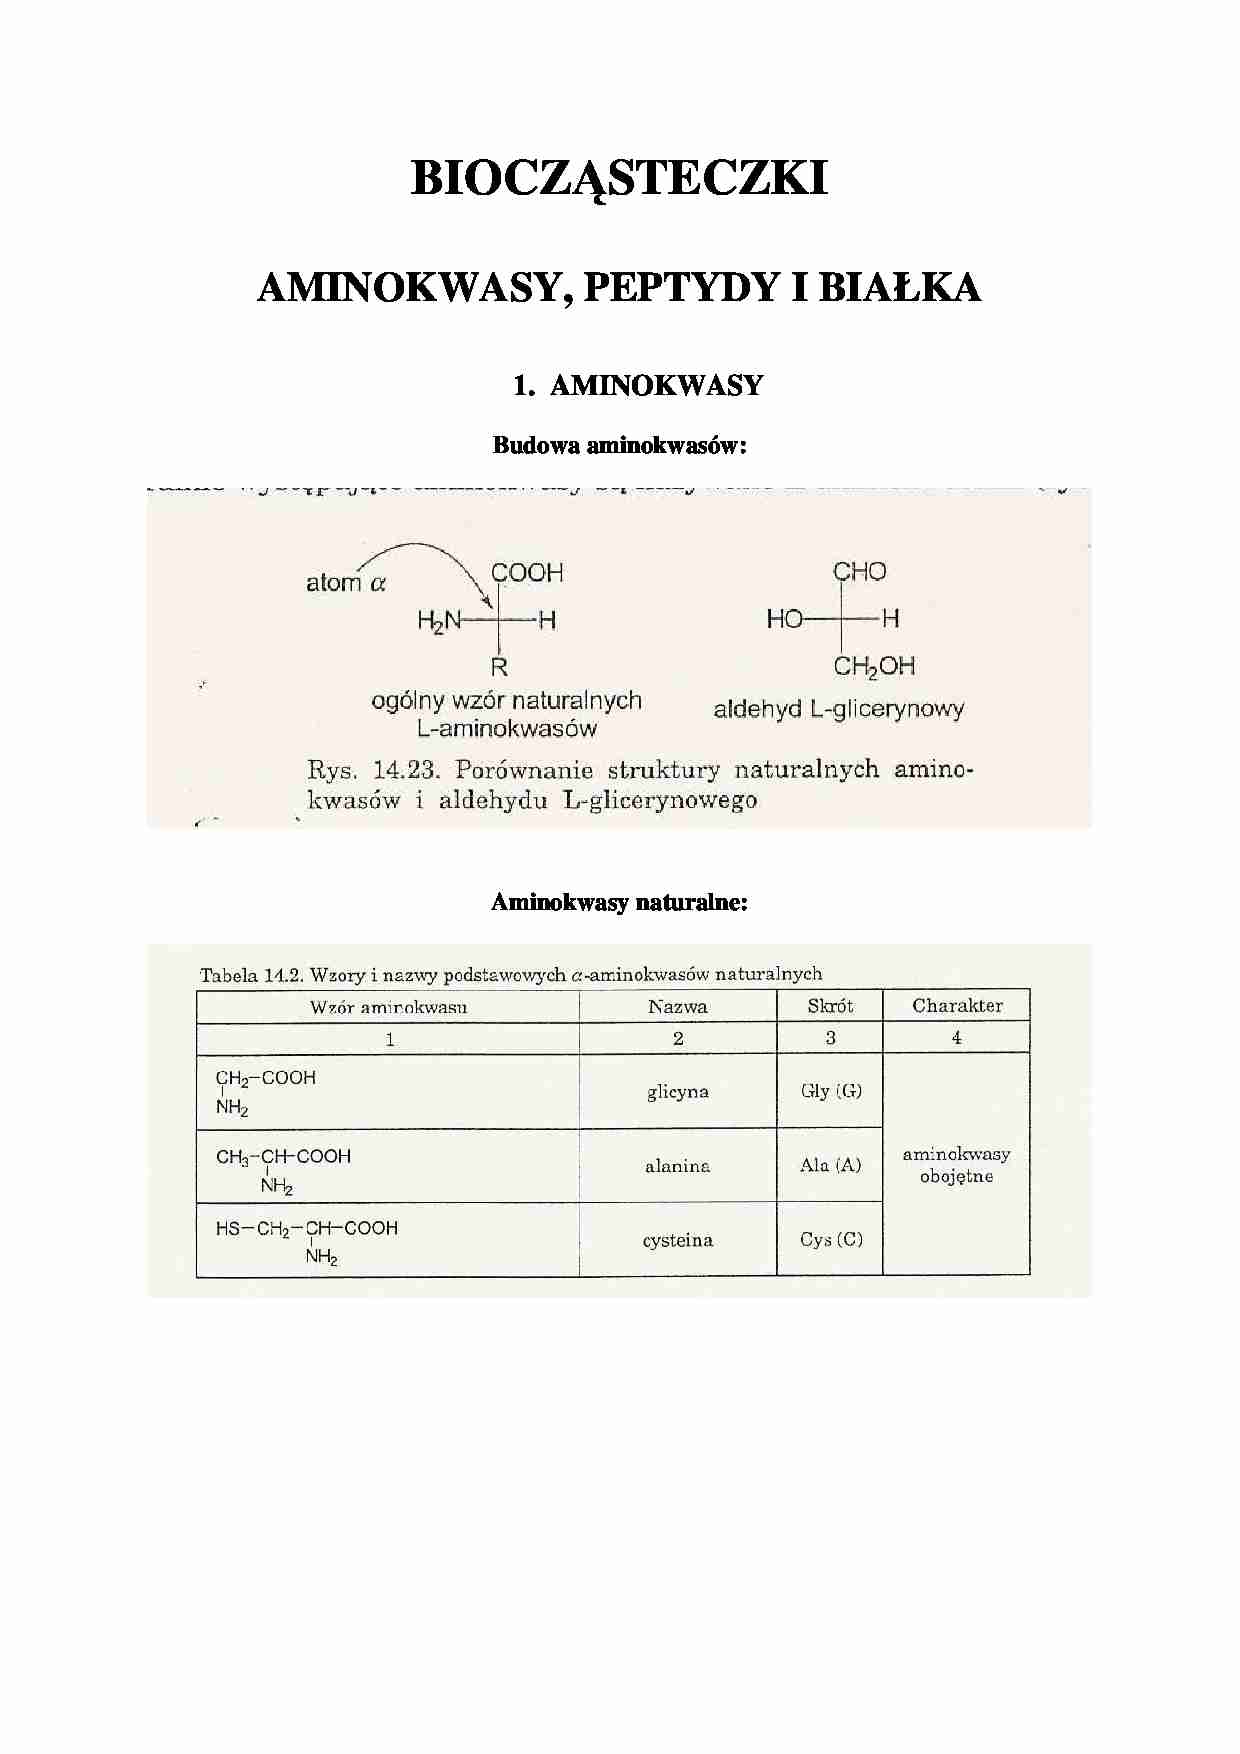 Aminokwasy, peptydy i białka - strona 1